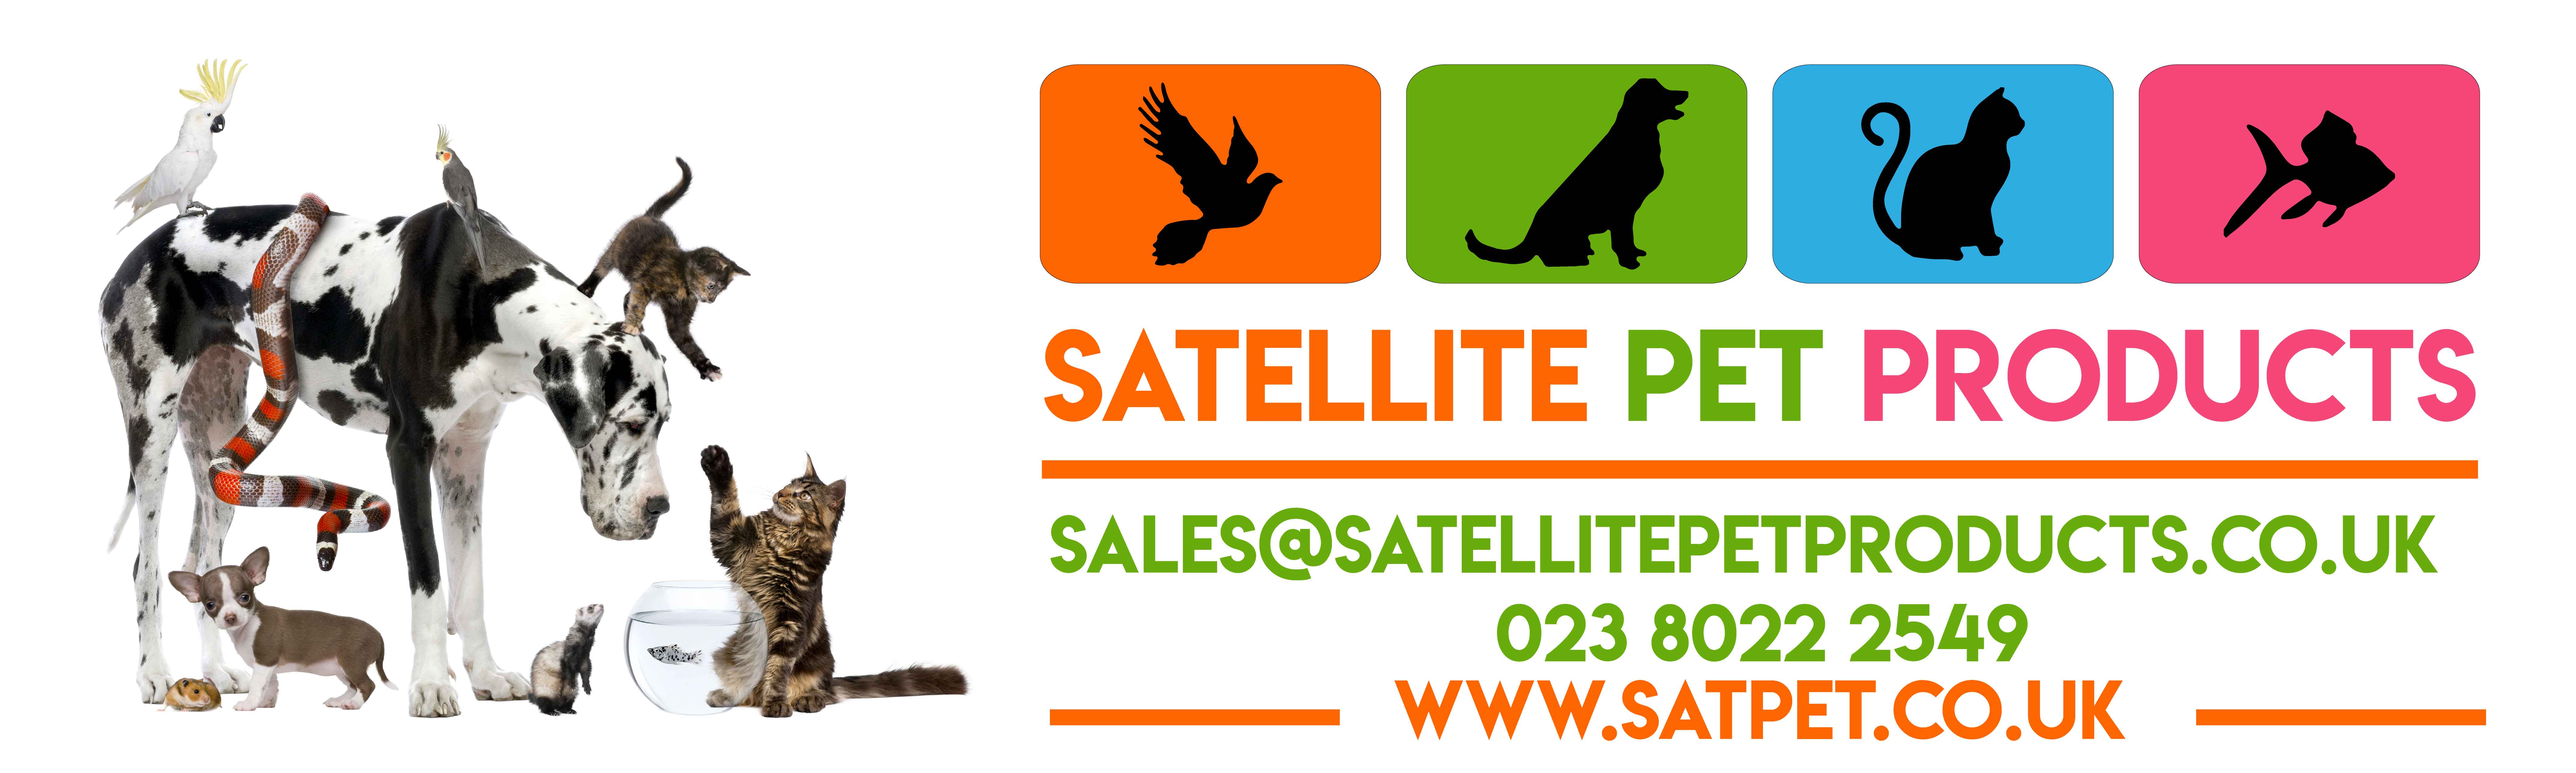 satellite pet products